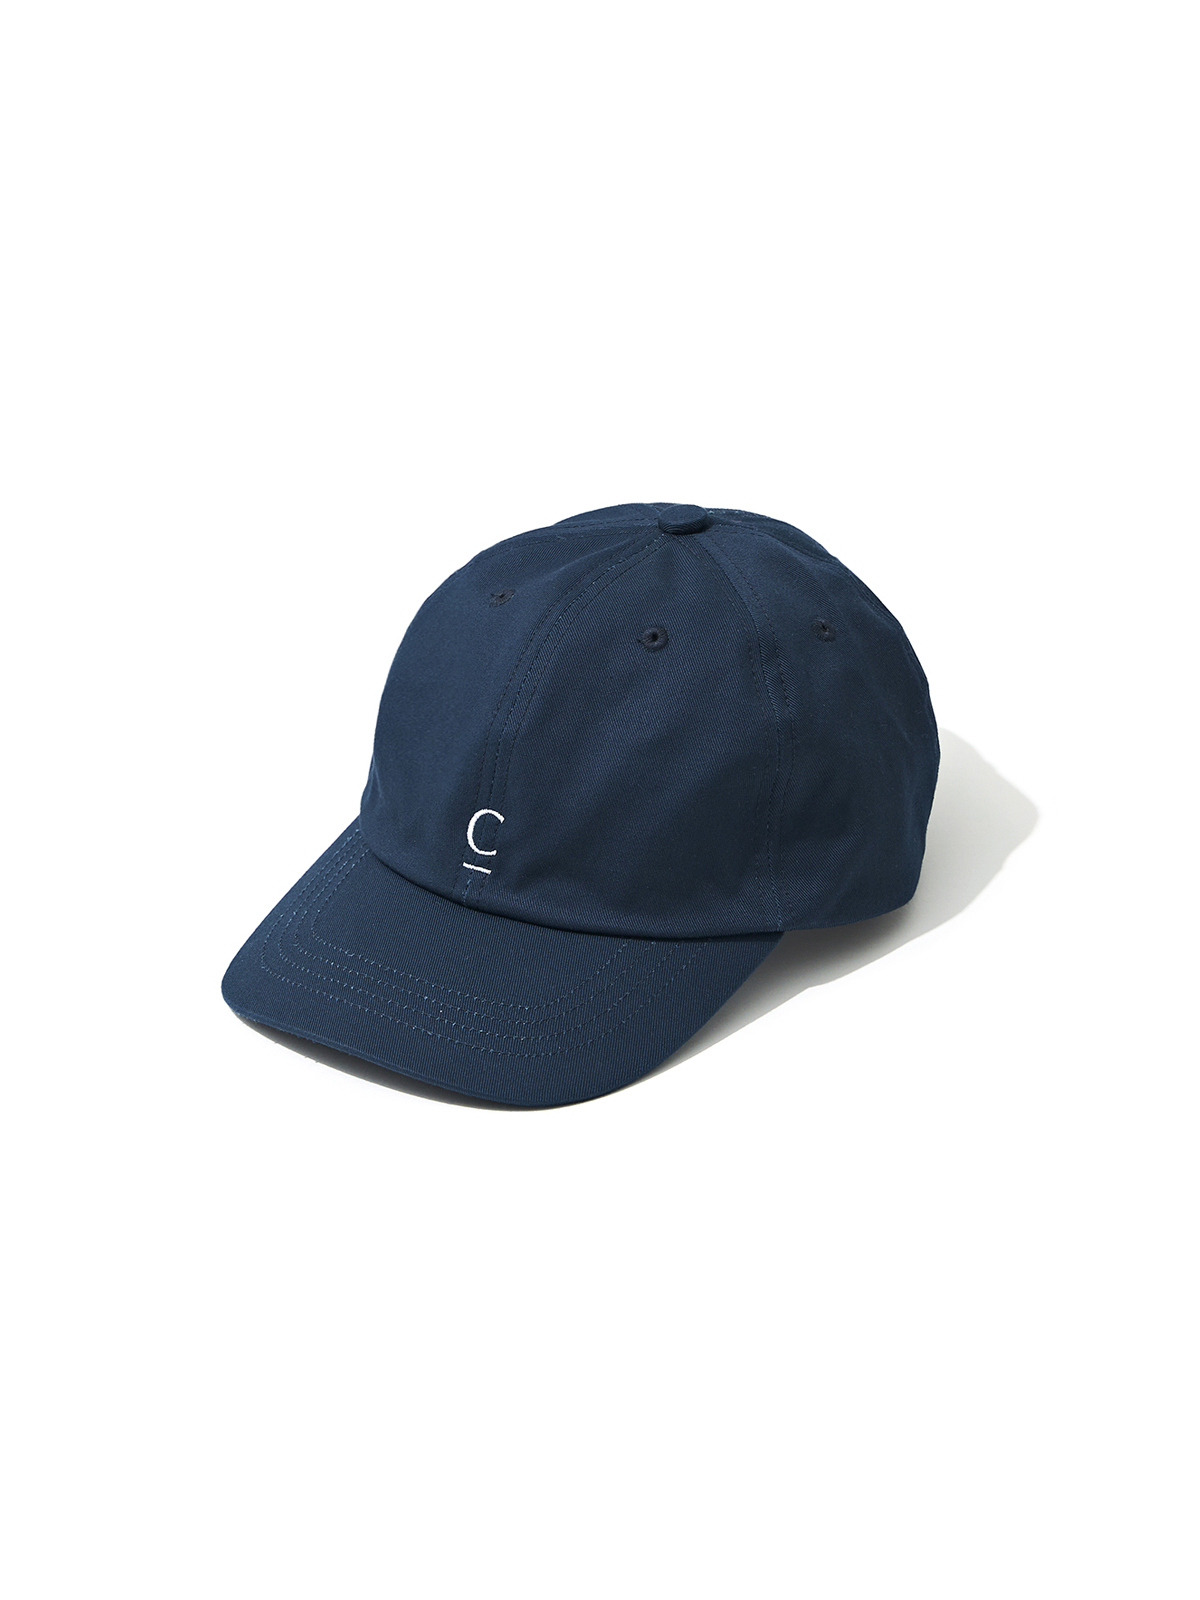 CHINO CLOTH CAP (LIGHT NAVY)